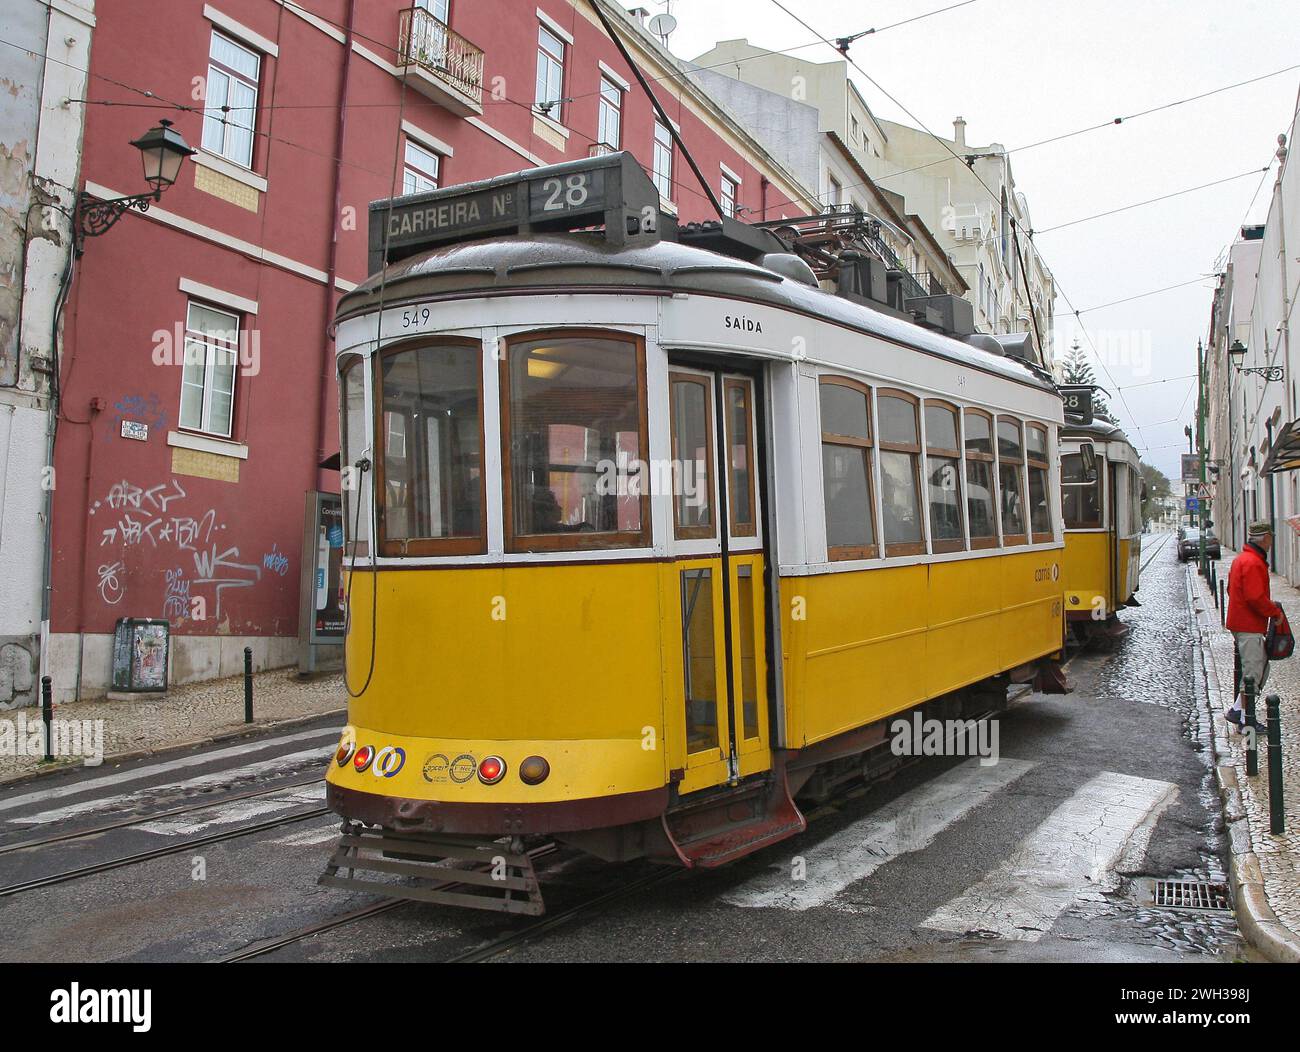 Die berühmte Straßenbahn 28 Lissabons. Foto: Thomas Wieck V e r o e f e n t l i c h u n g u r m i t n m e u n d H o n o r a r z a h Stockfoto